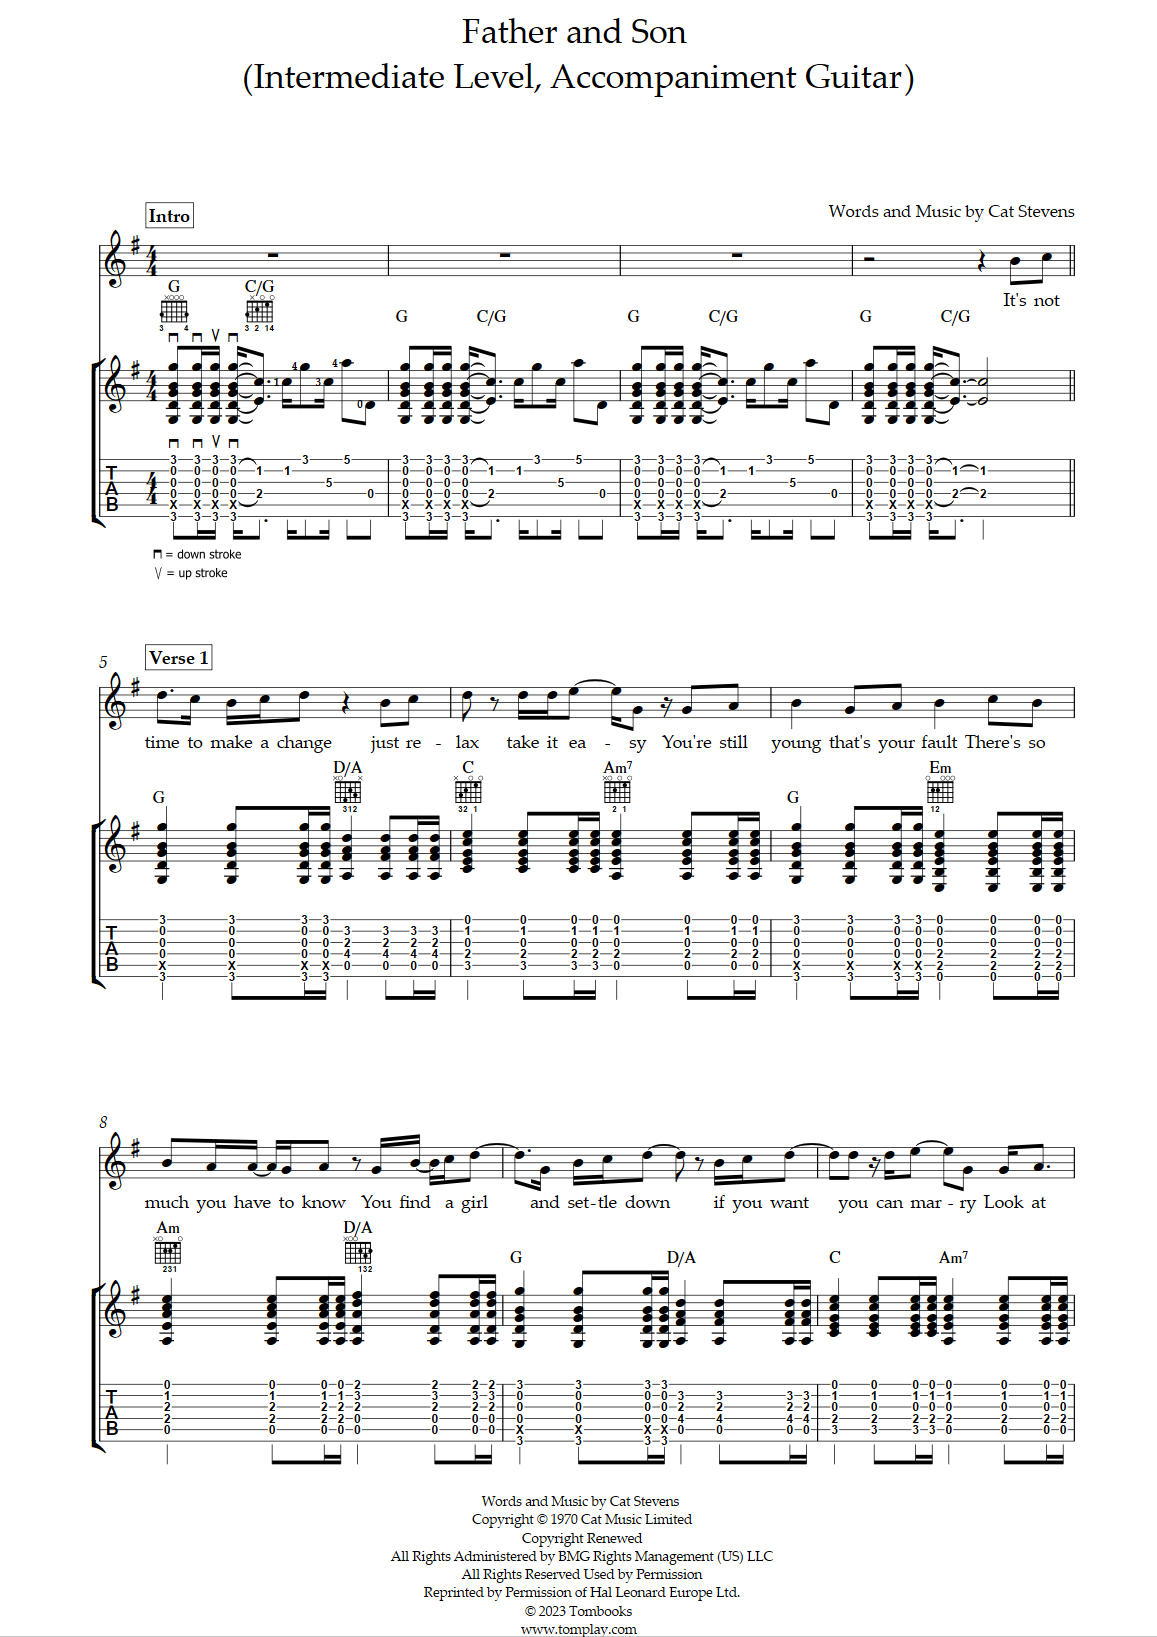 Father And Son - Cat Stevens guitar chords w/ lyrics strumming tutorial | By Bert's Guitar Tutorials